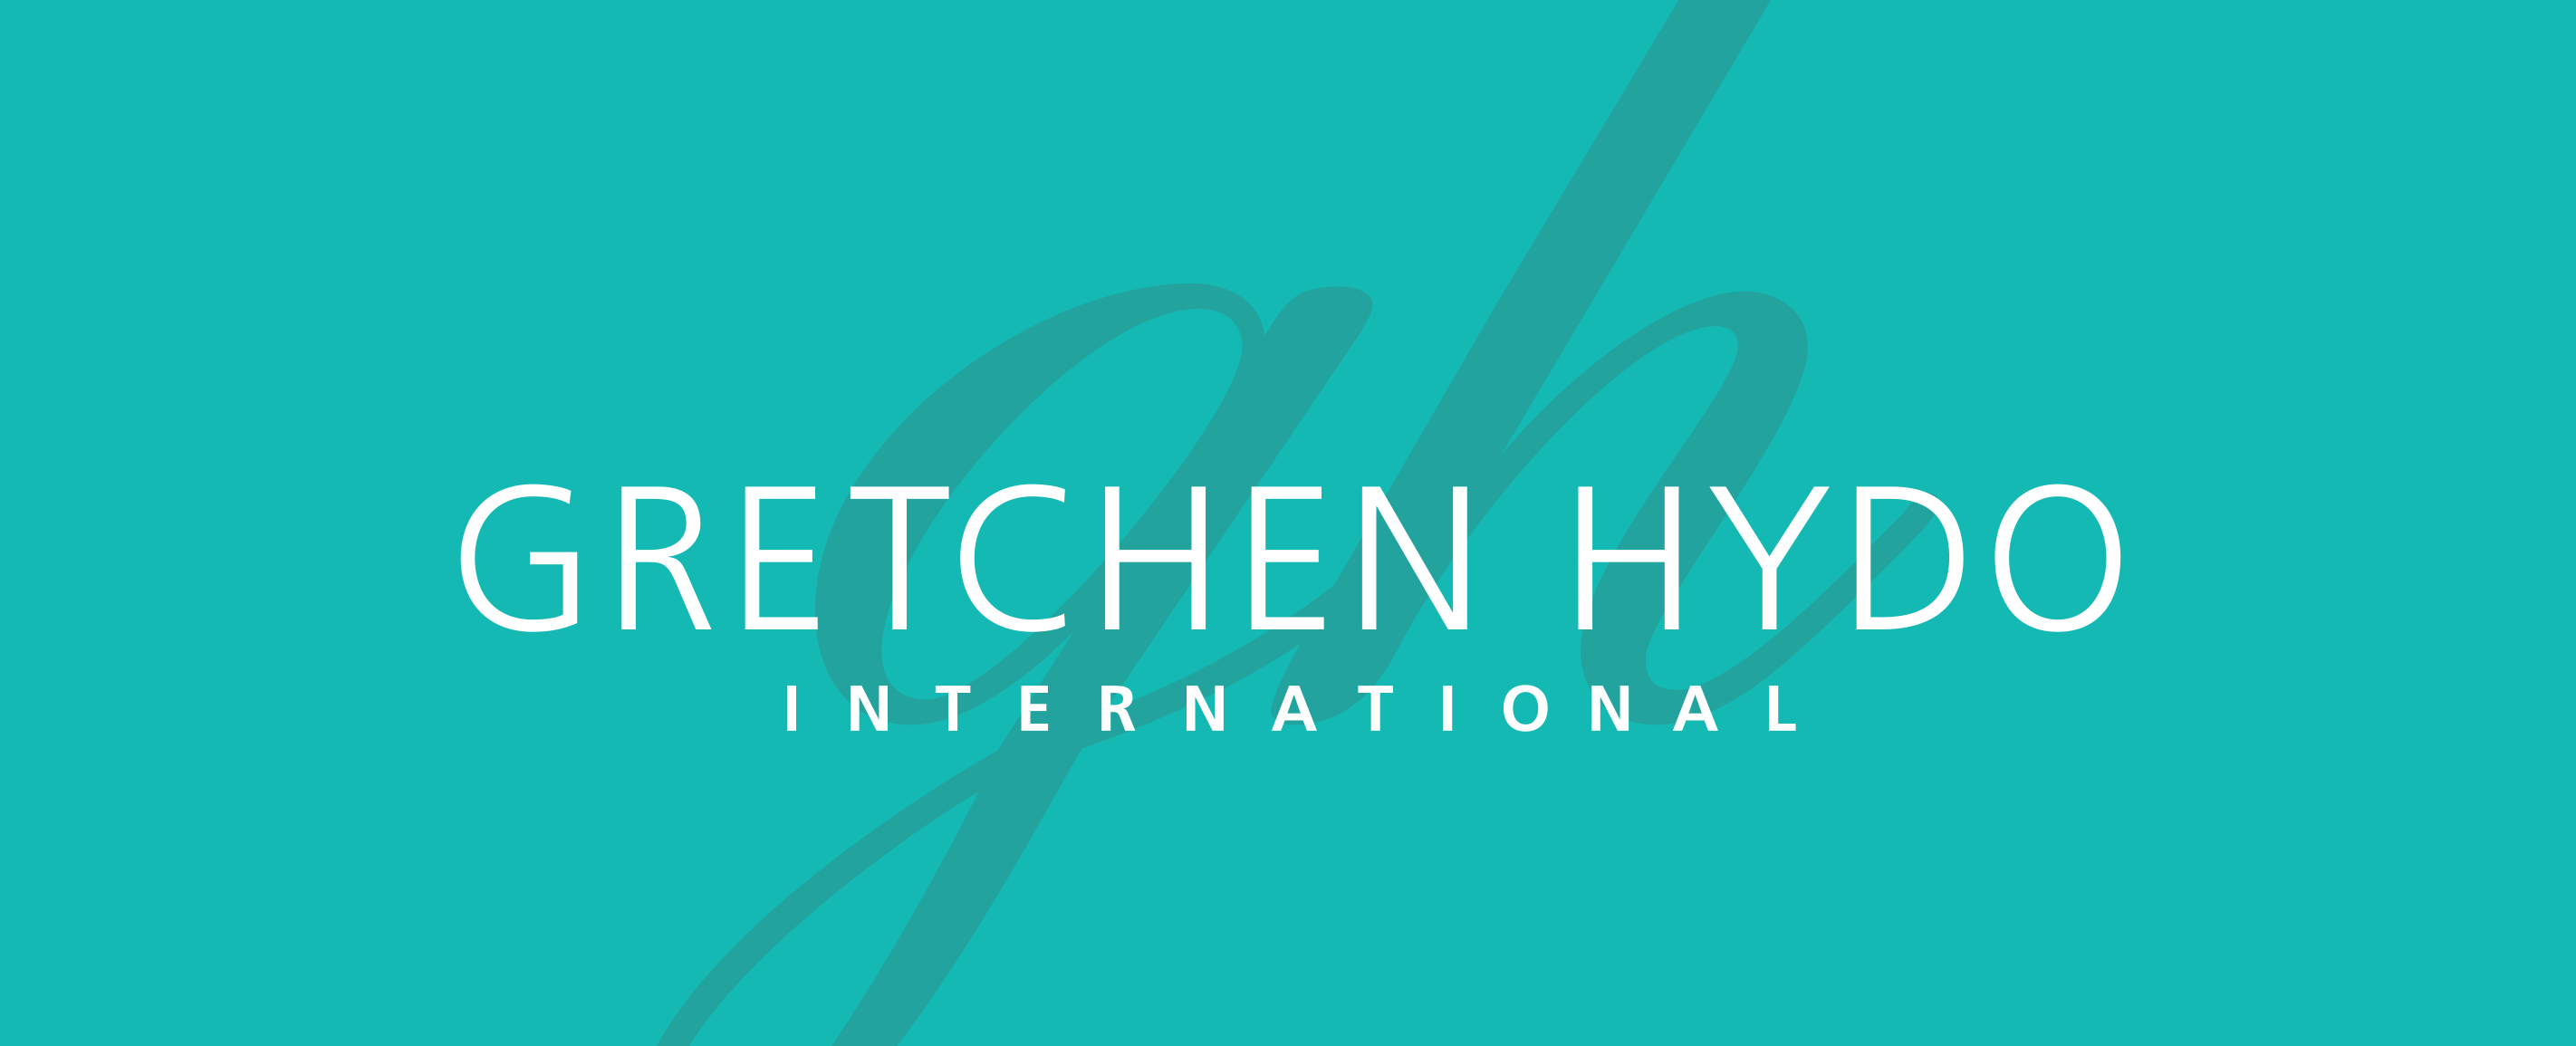 Gretchen Hydo International Cover